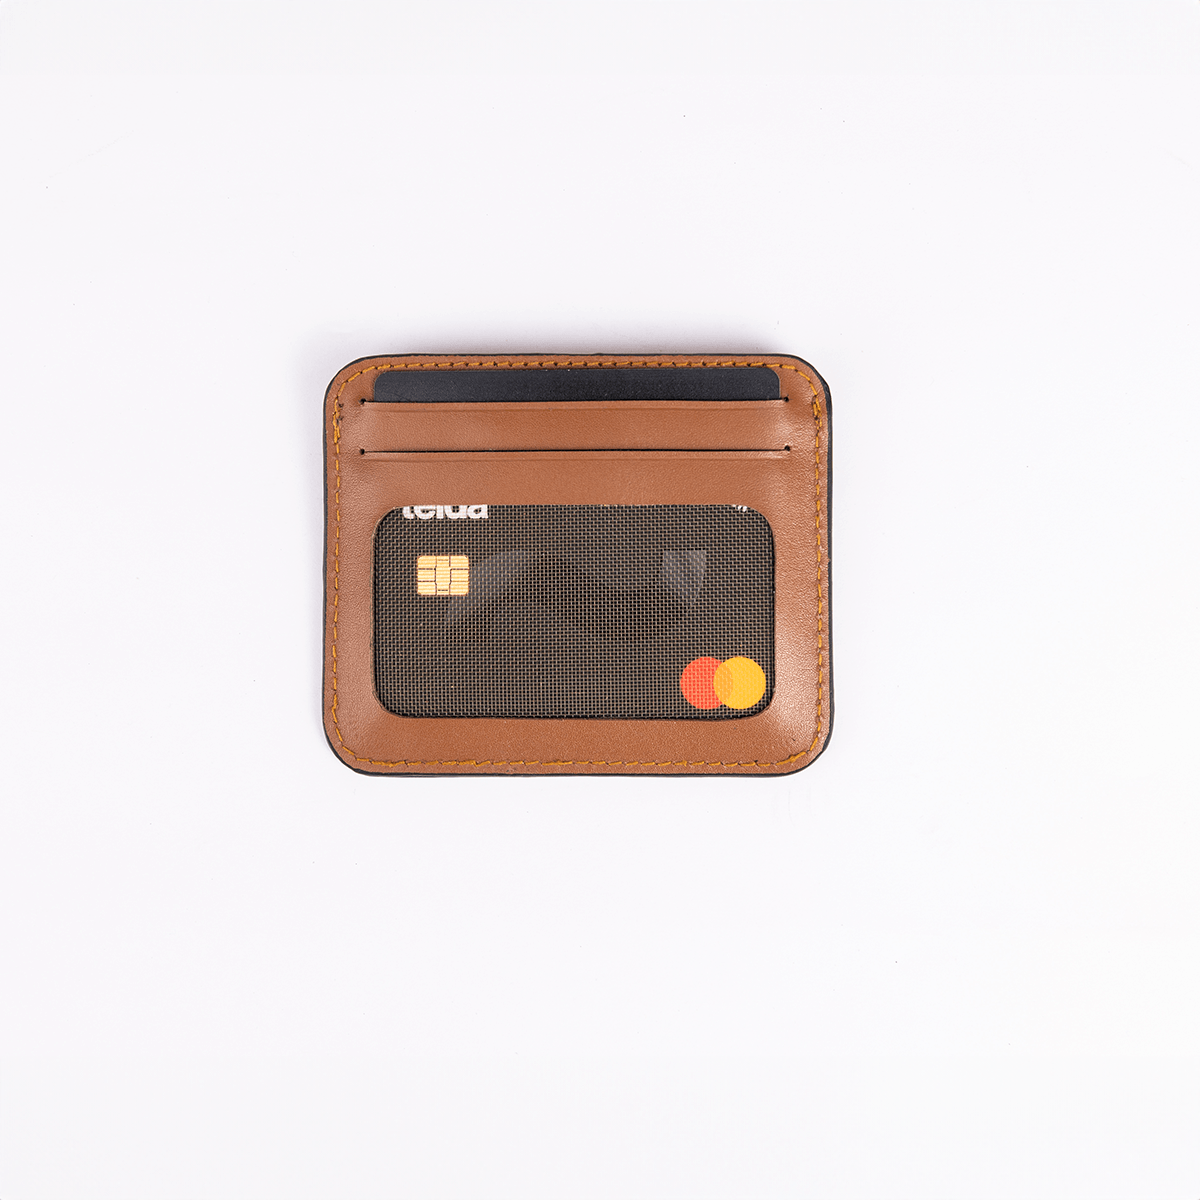 Leather Card Holder - Havane - Hatchill